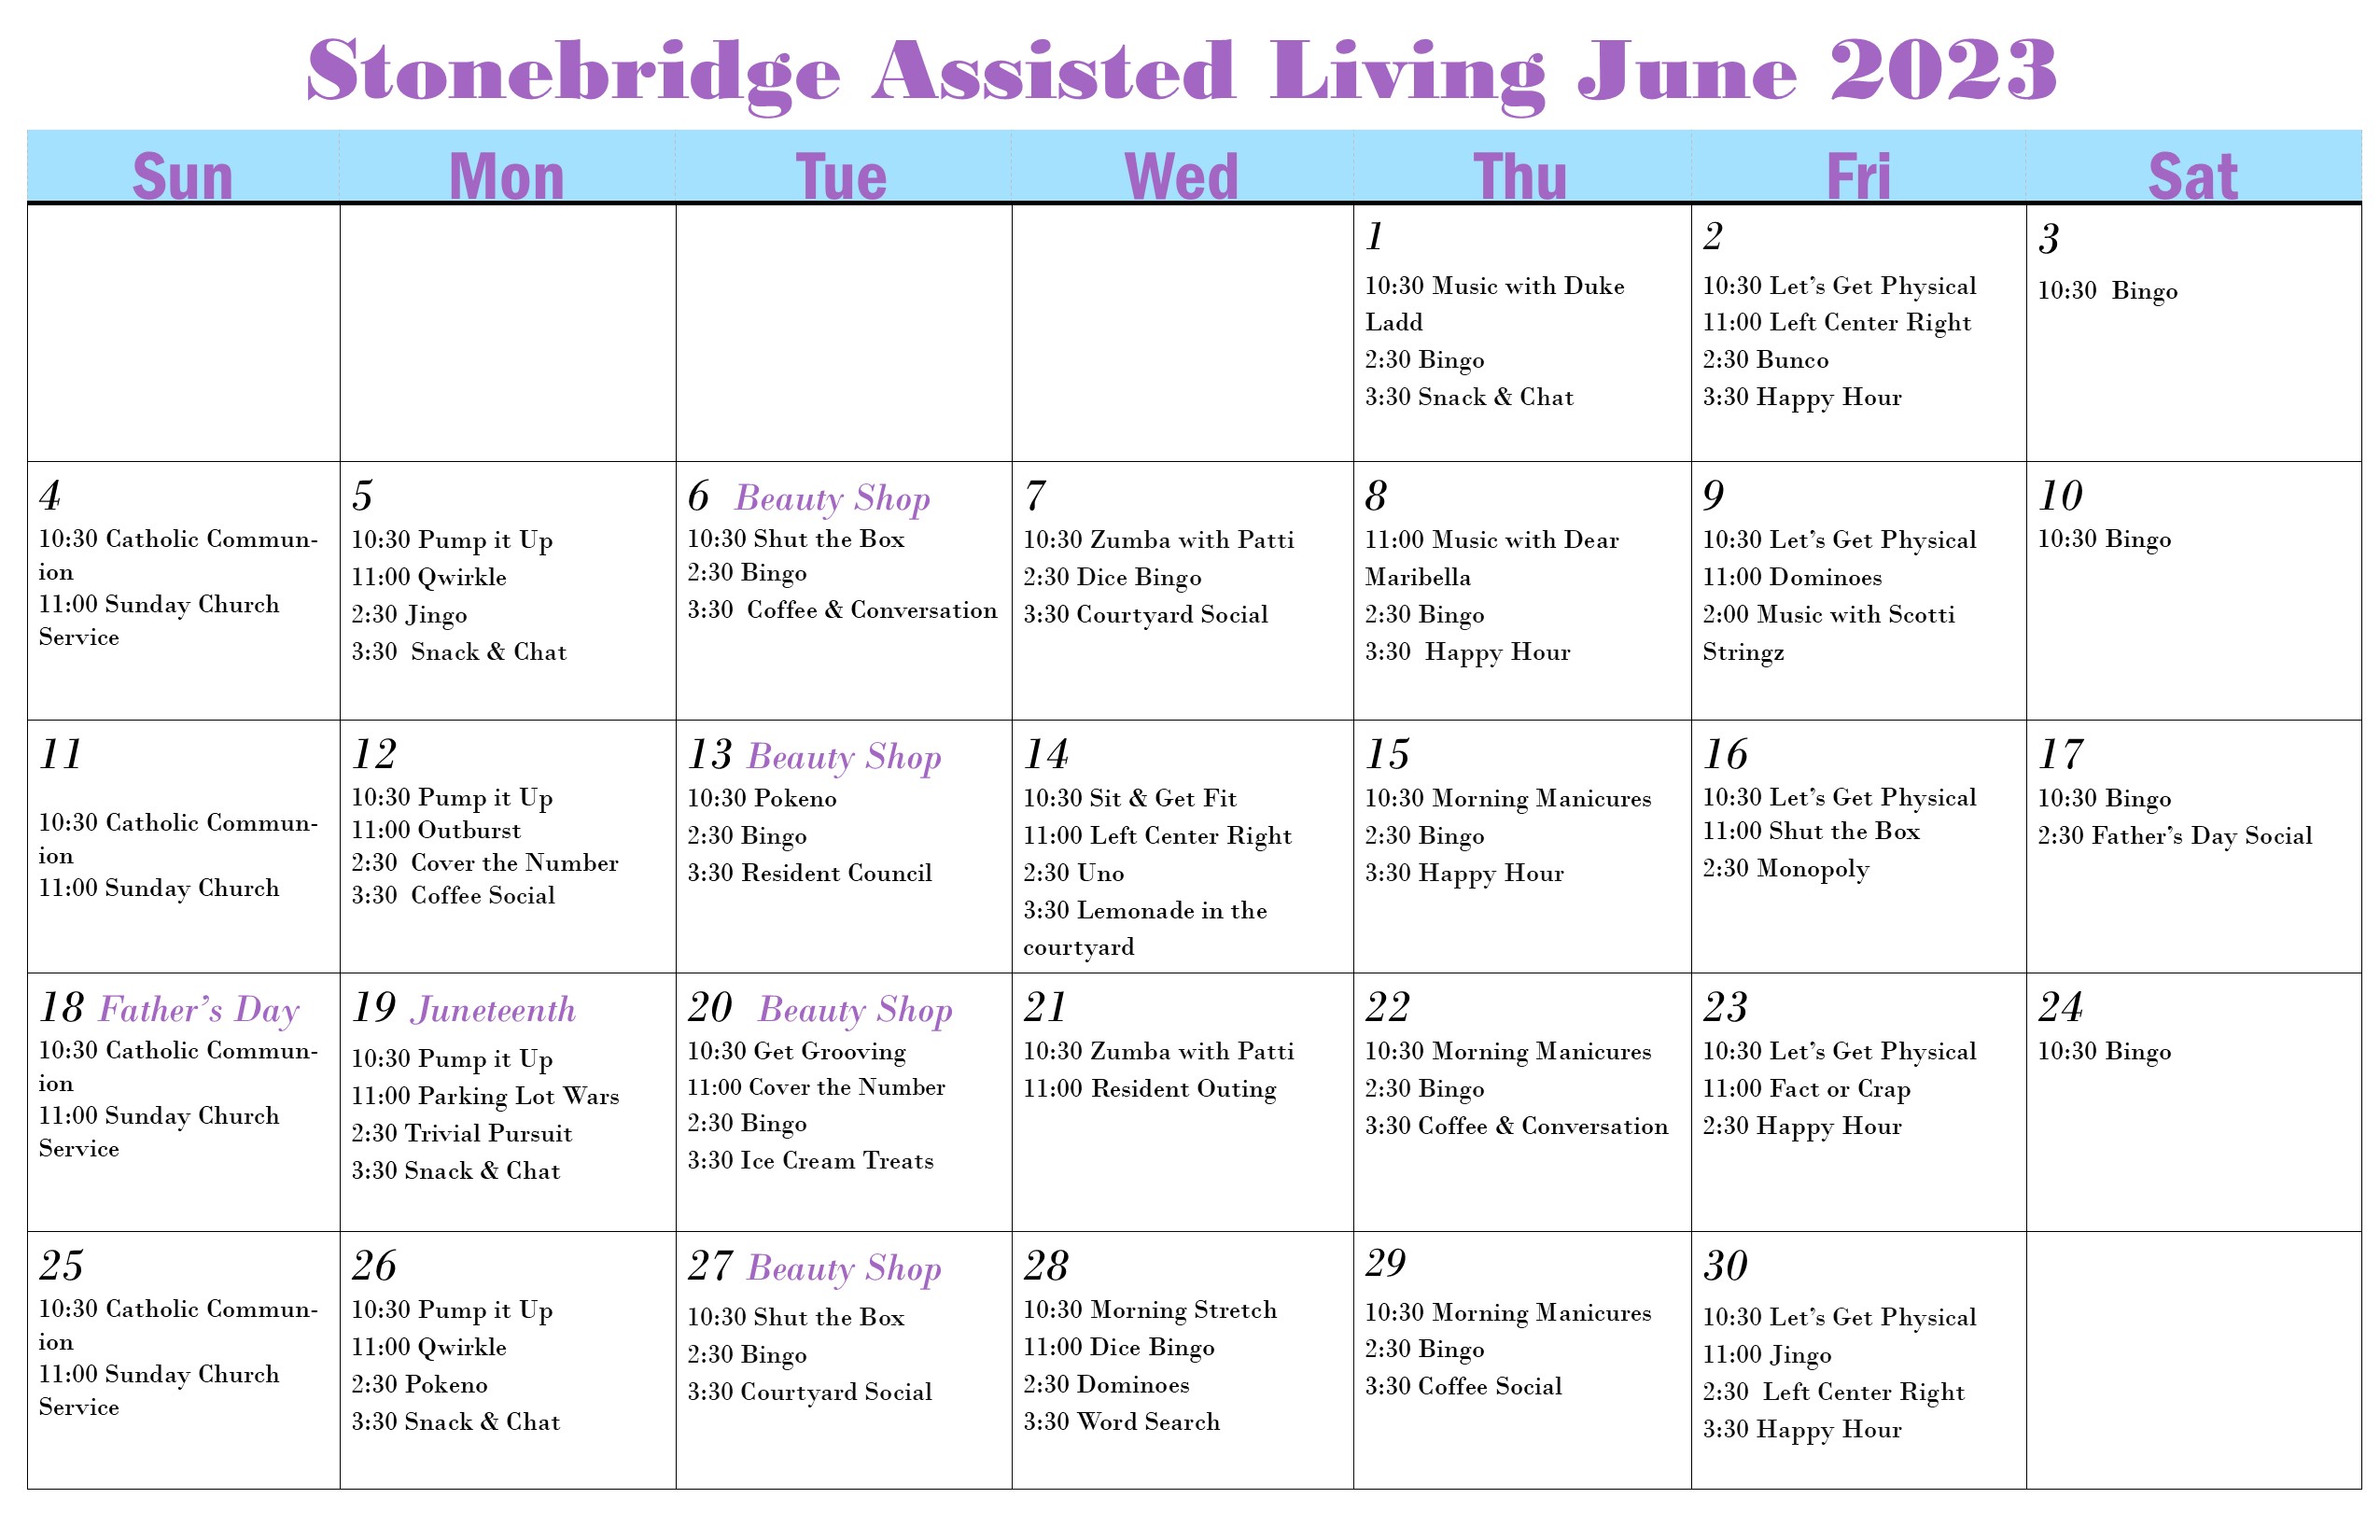 Stonebridge June 2023 Events Calendar